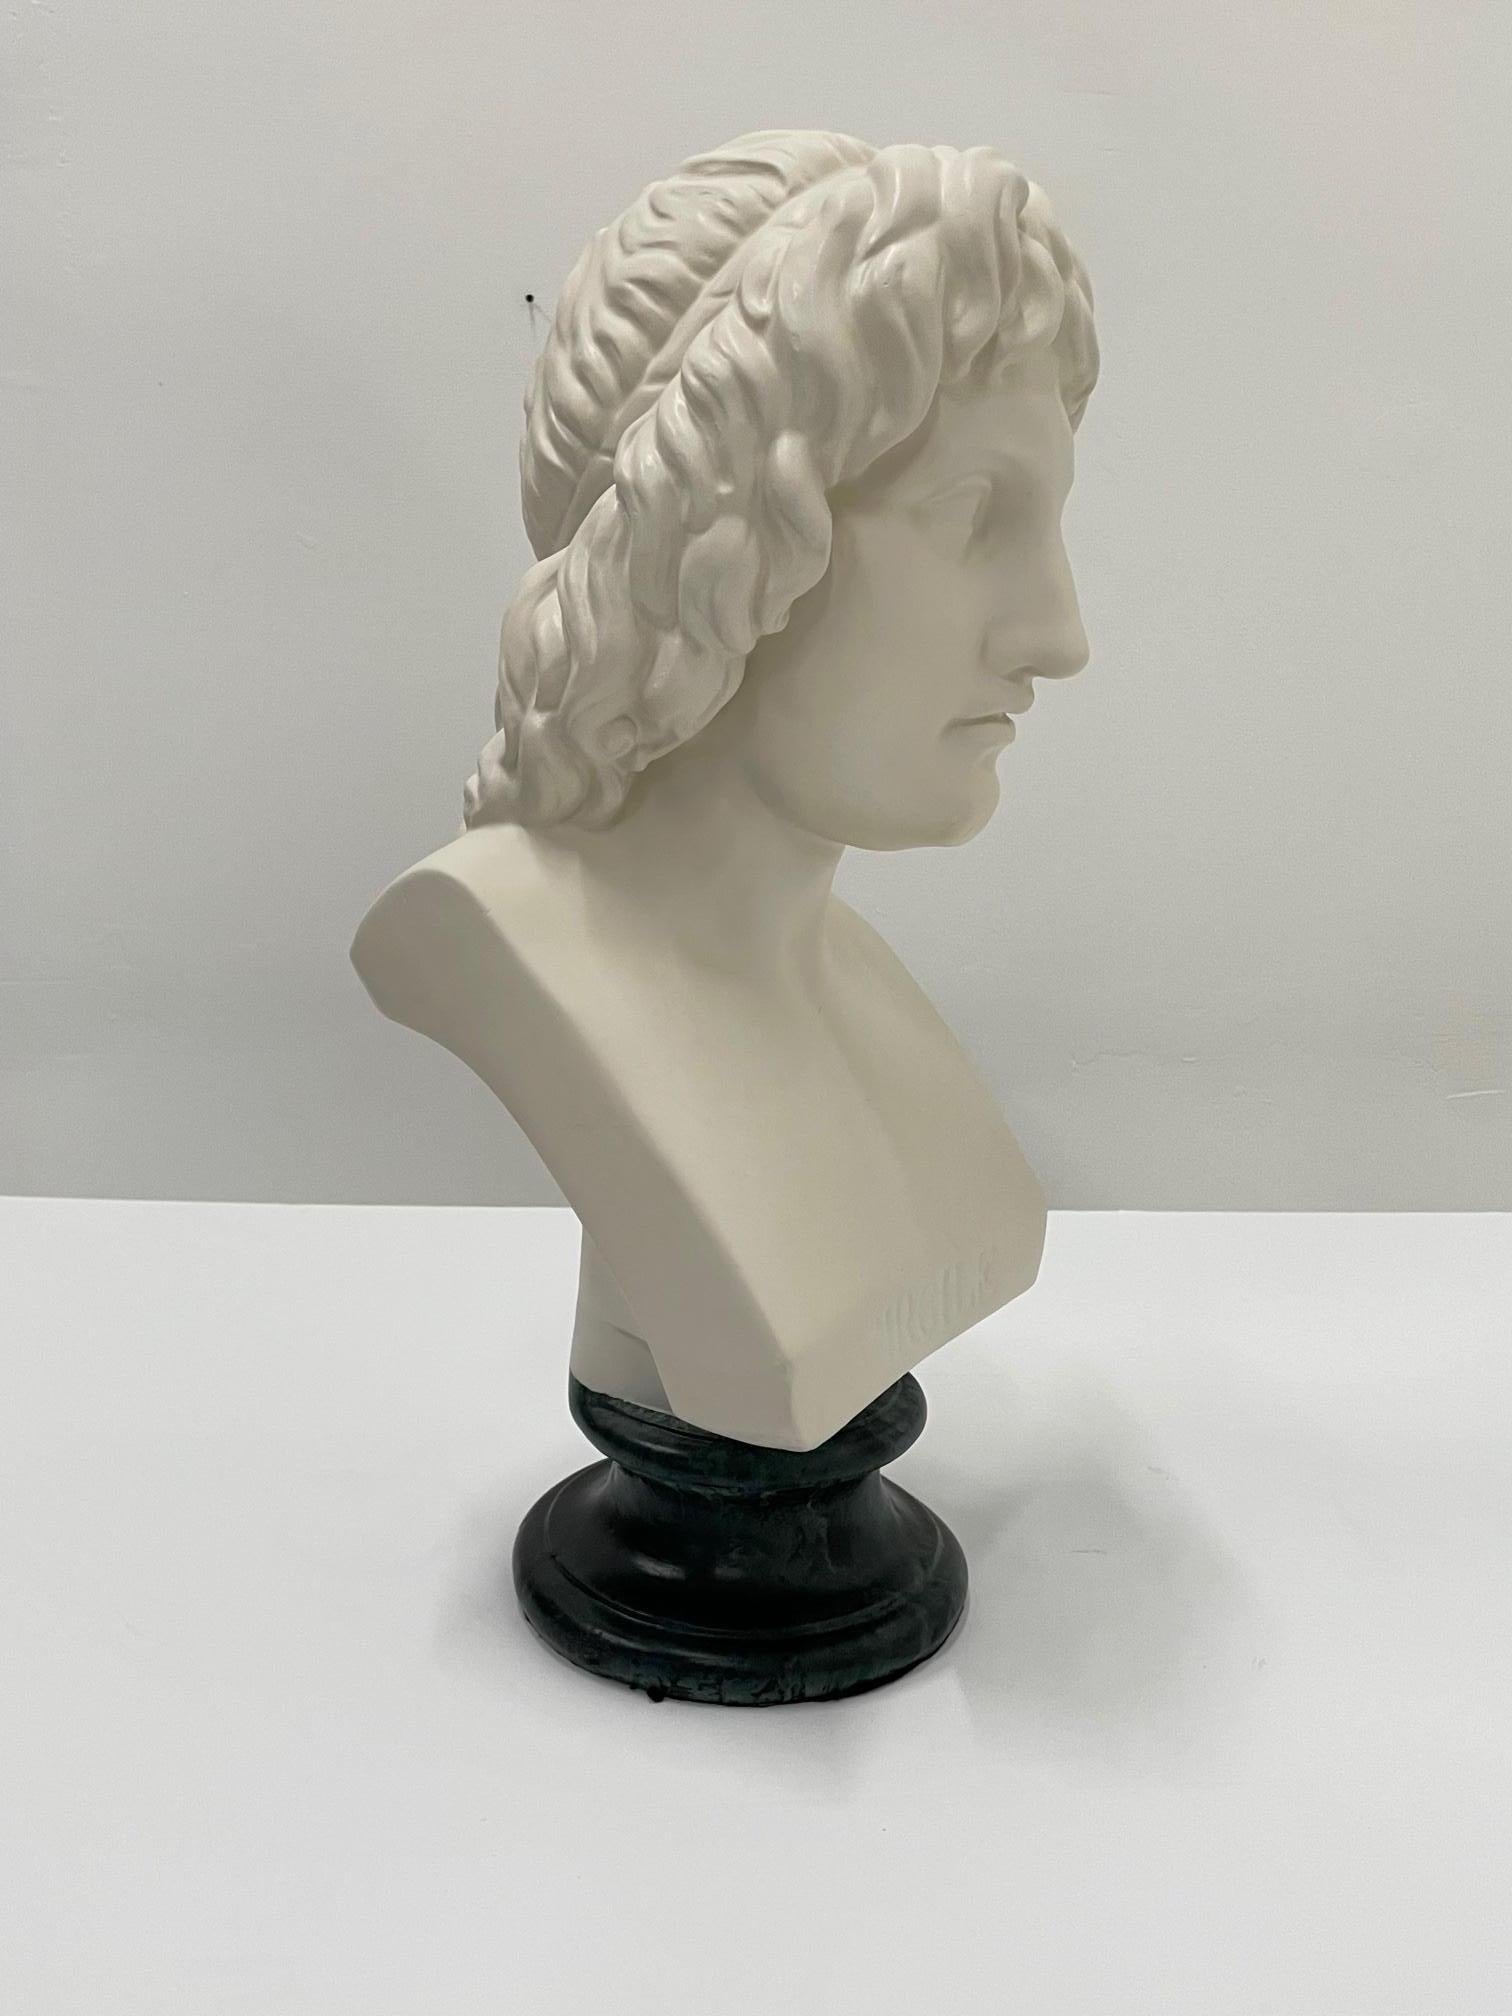 Sensual cast plaster bust of the Roman poet Virgil stamped Florentine Plaster Co. / Makers Philadelphia.
Marvelous detail and contrasting marbleized base.